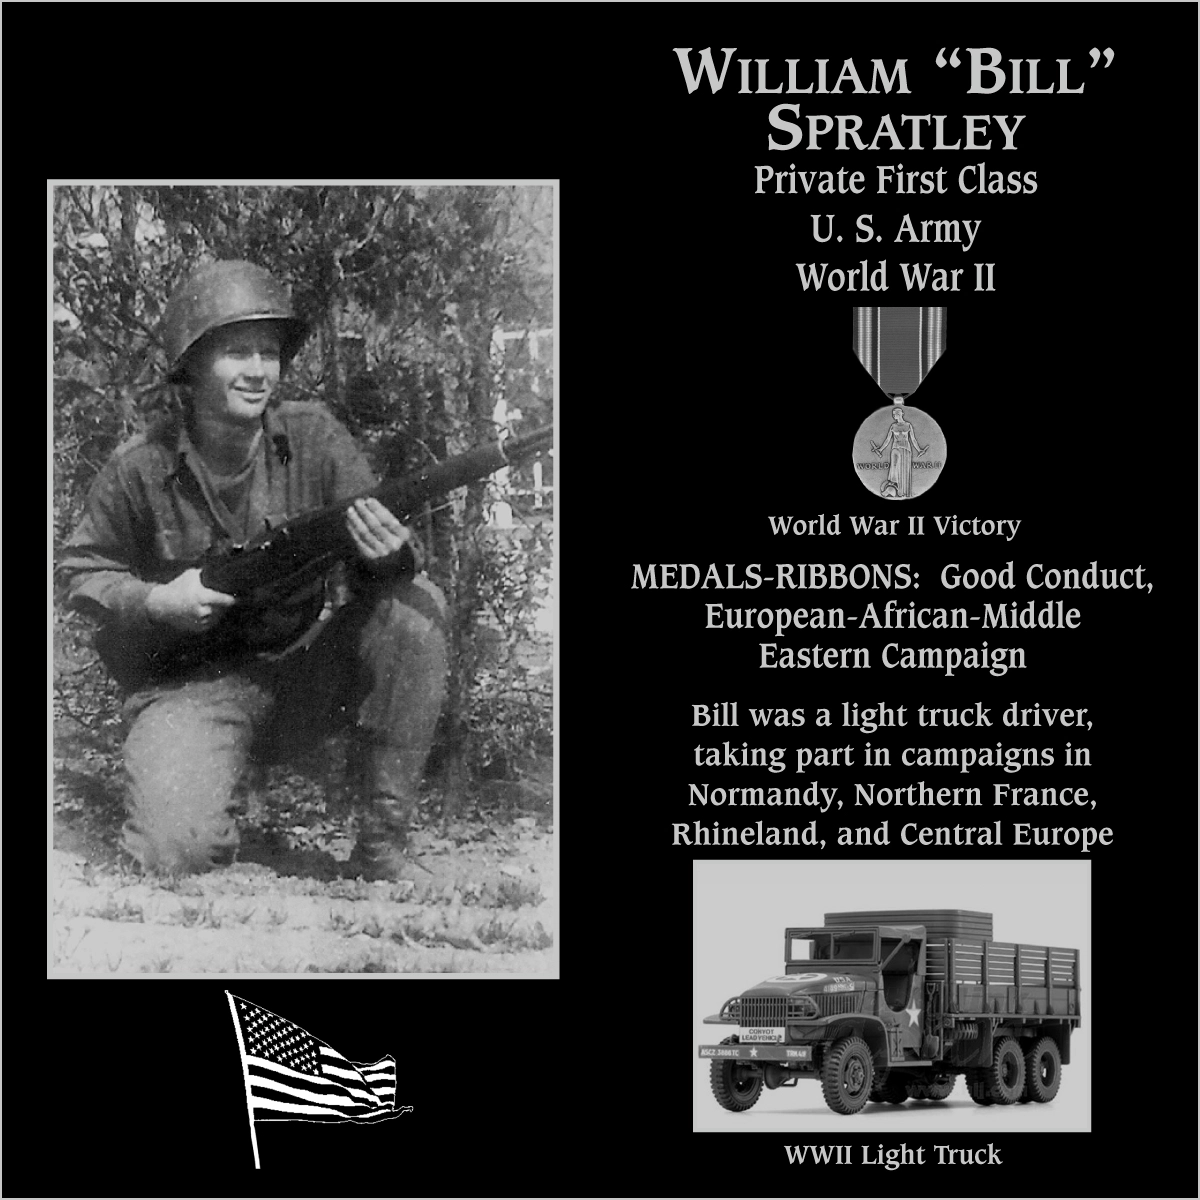 William “Bill” Spratley